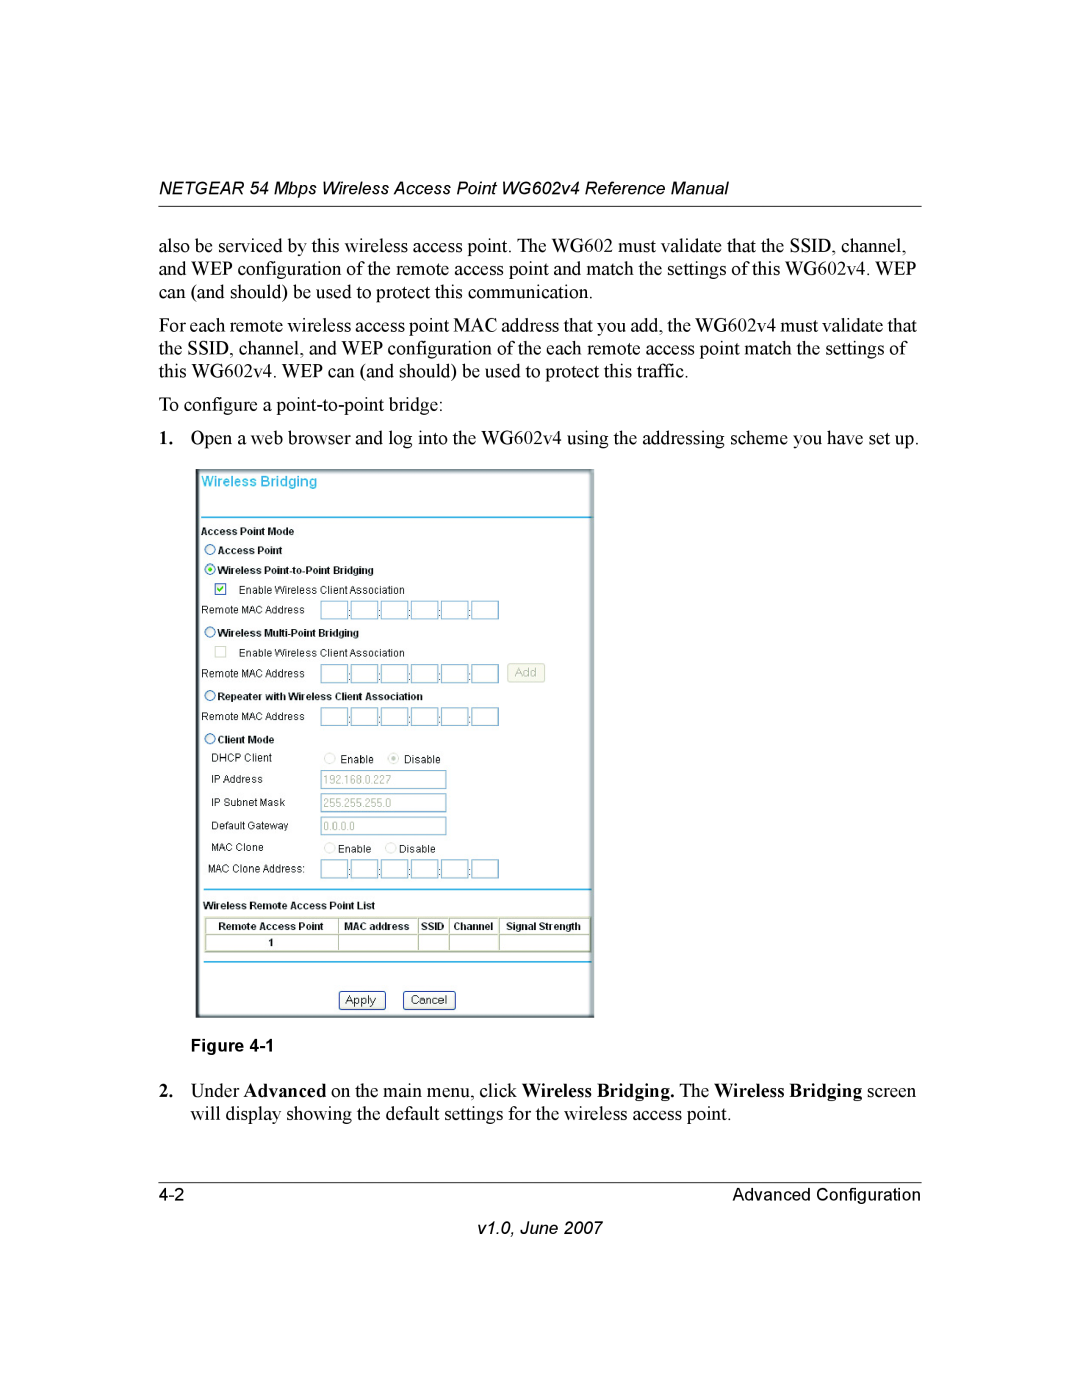 NETGEAR WG602V4 manual To configure a point-to-point bridge 